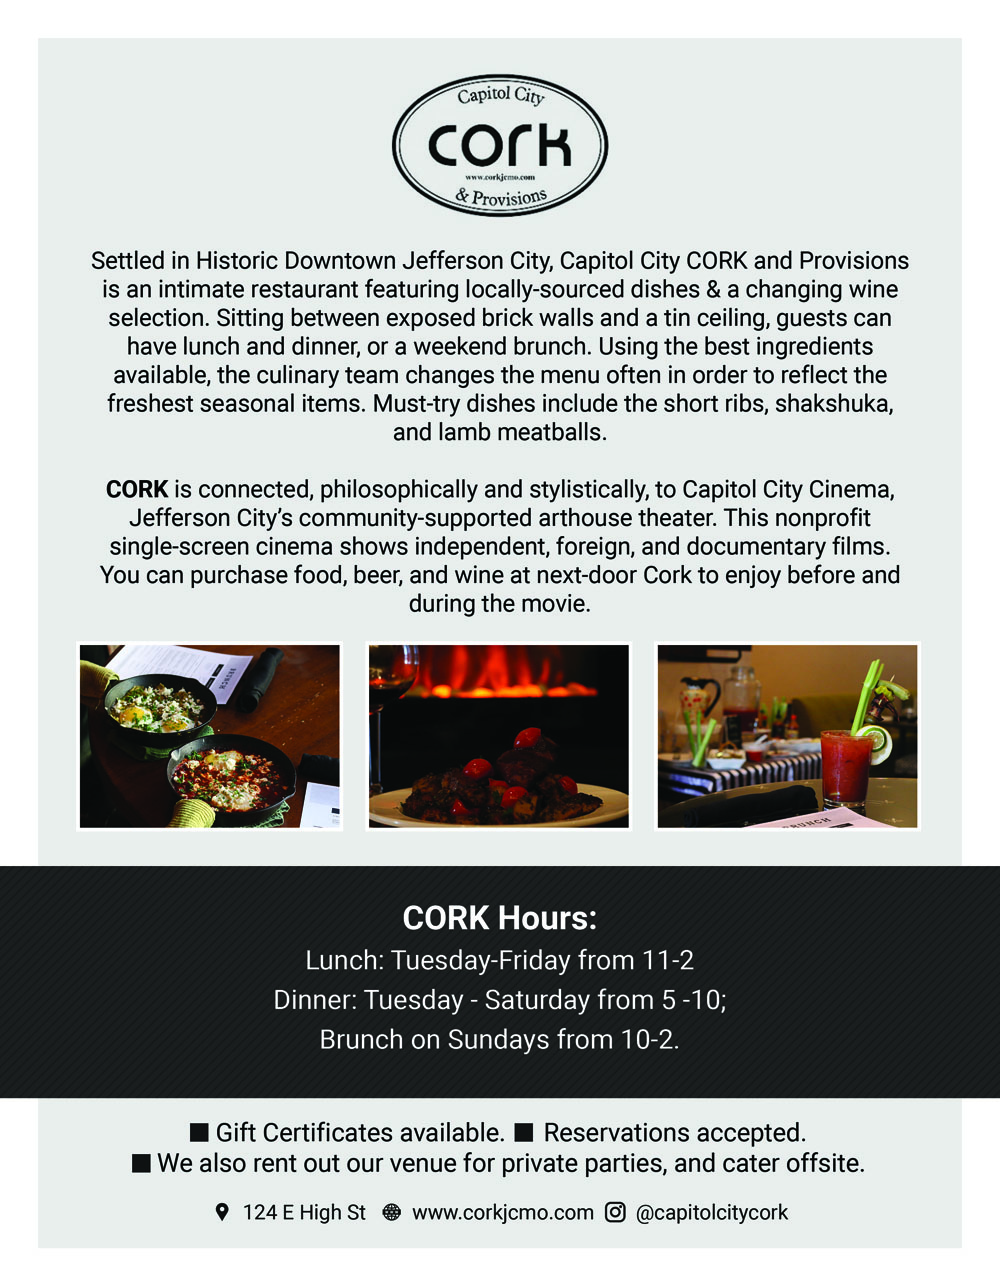 Capitol City Cork & Provisions